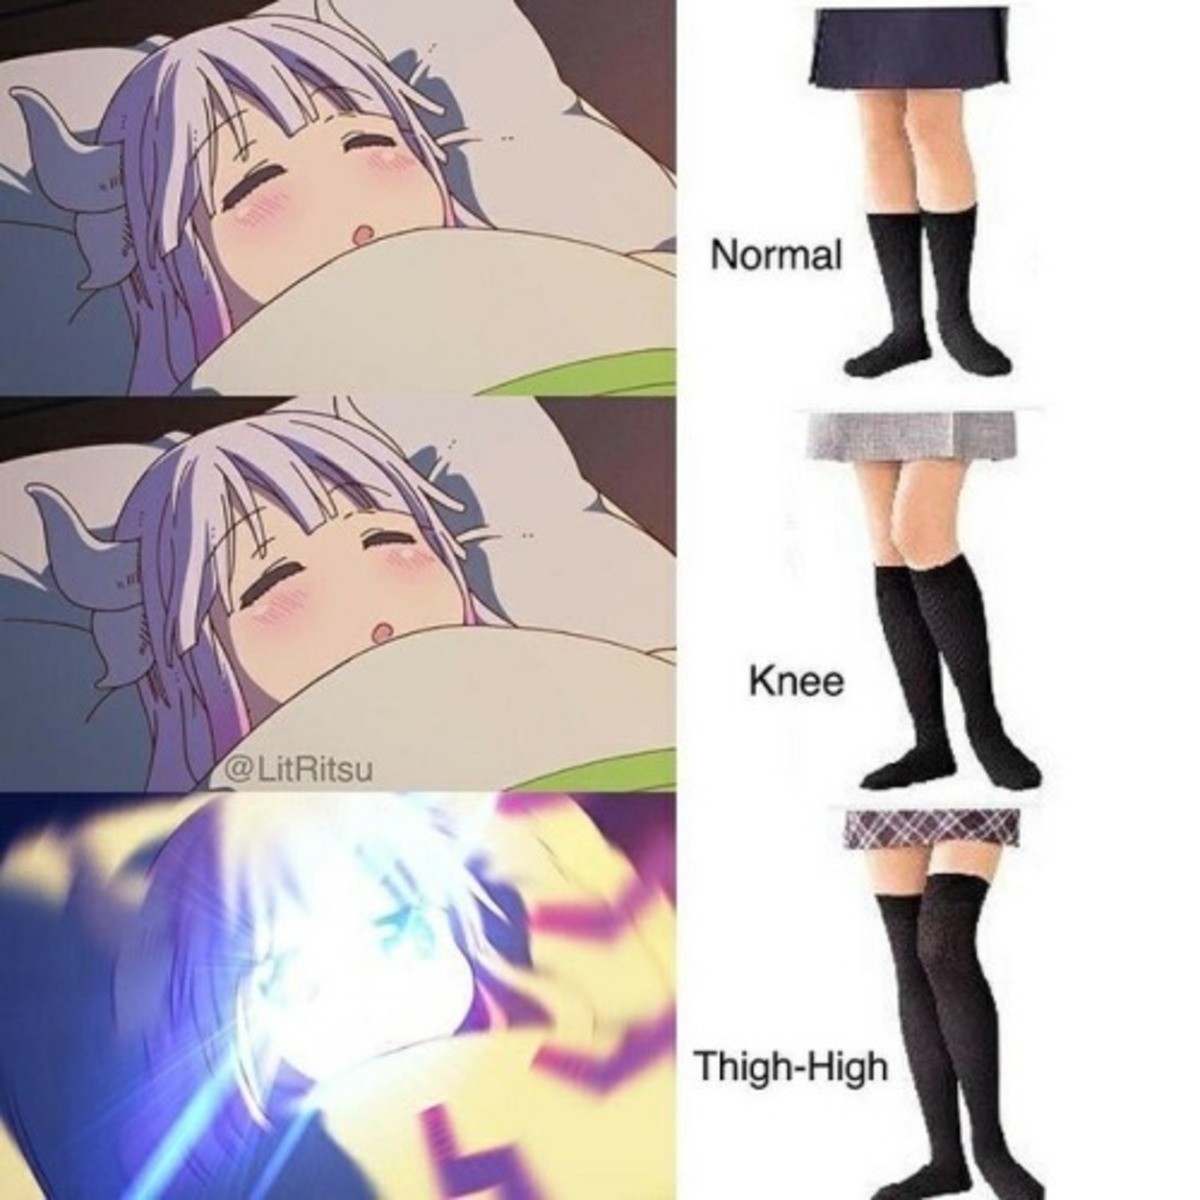 Thigh high anime